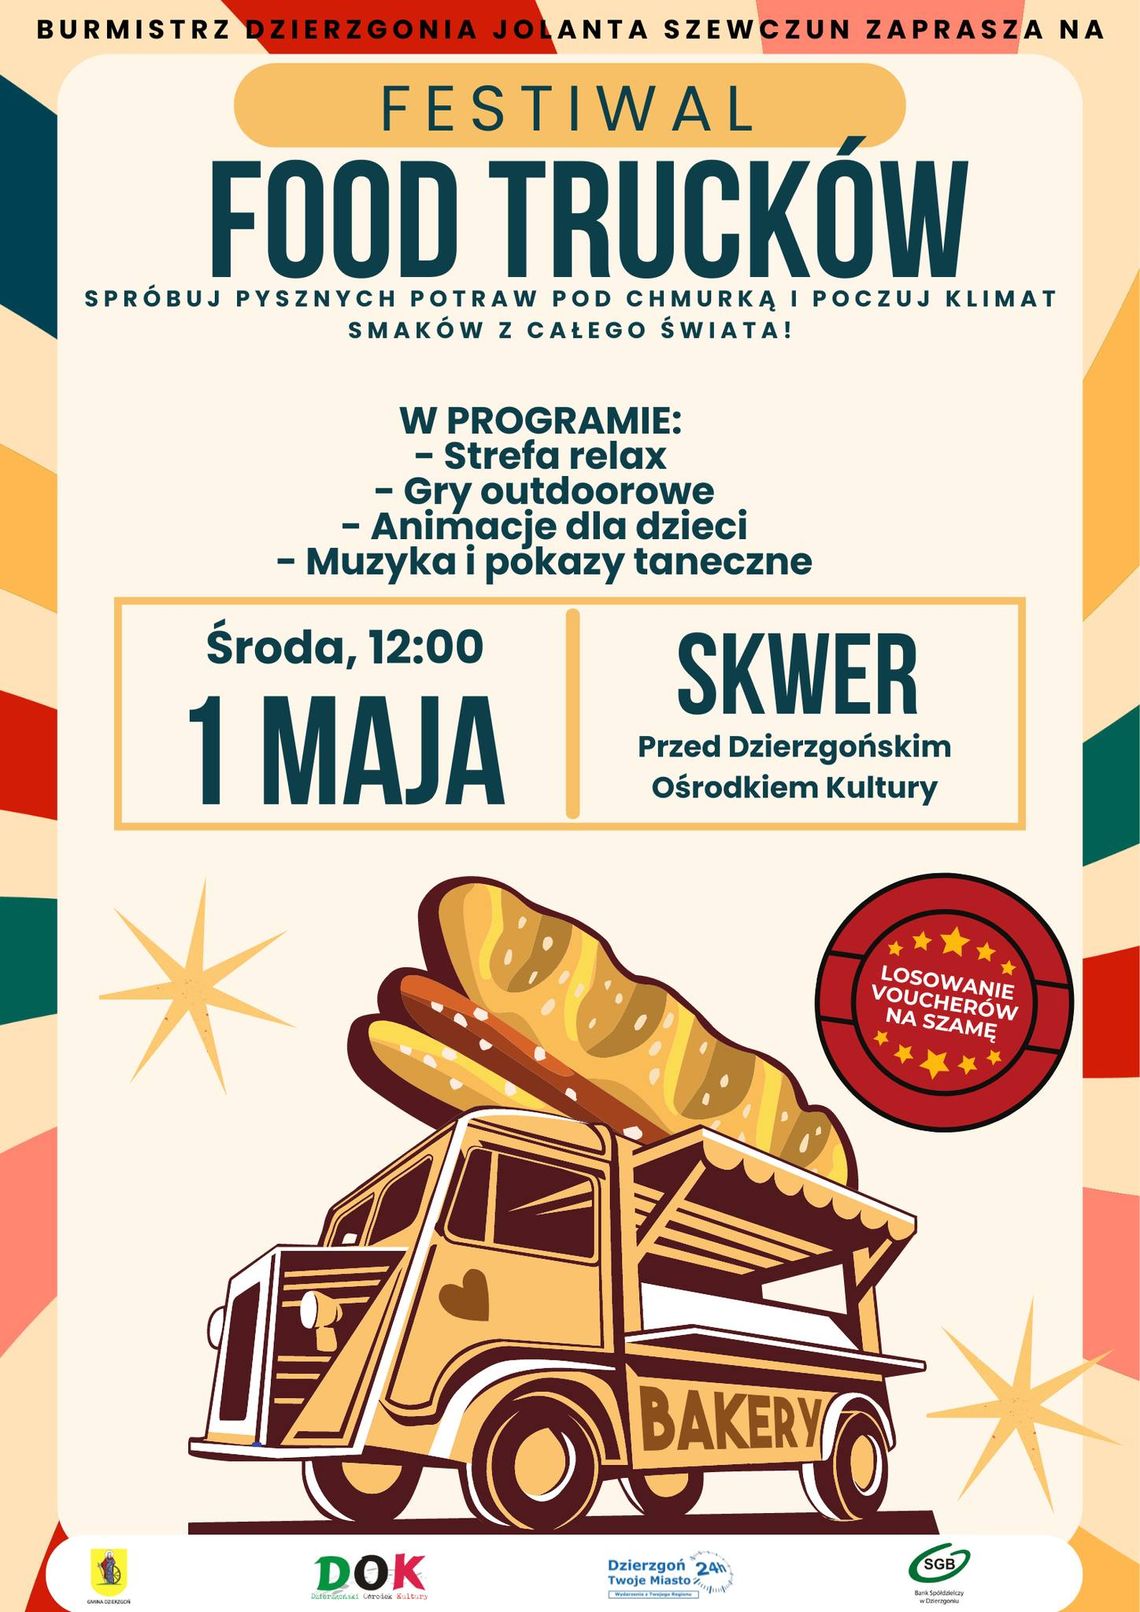 Festiwal Food Trucków w Dzierzgoniu.